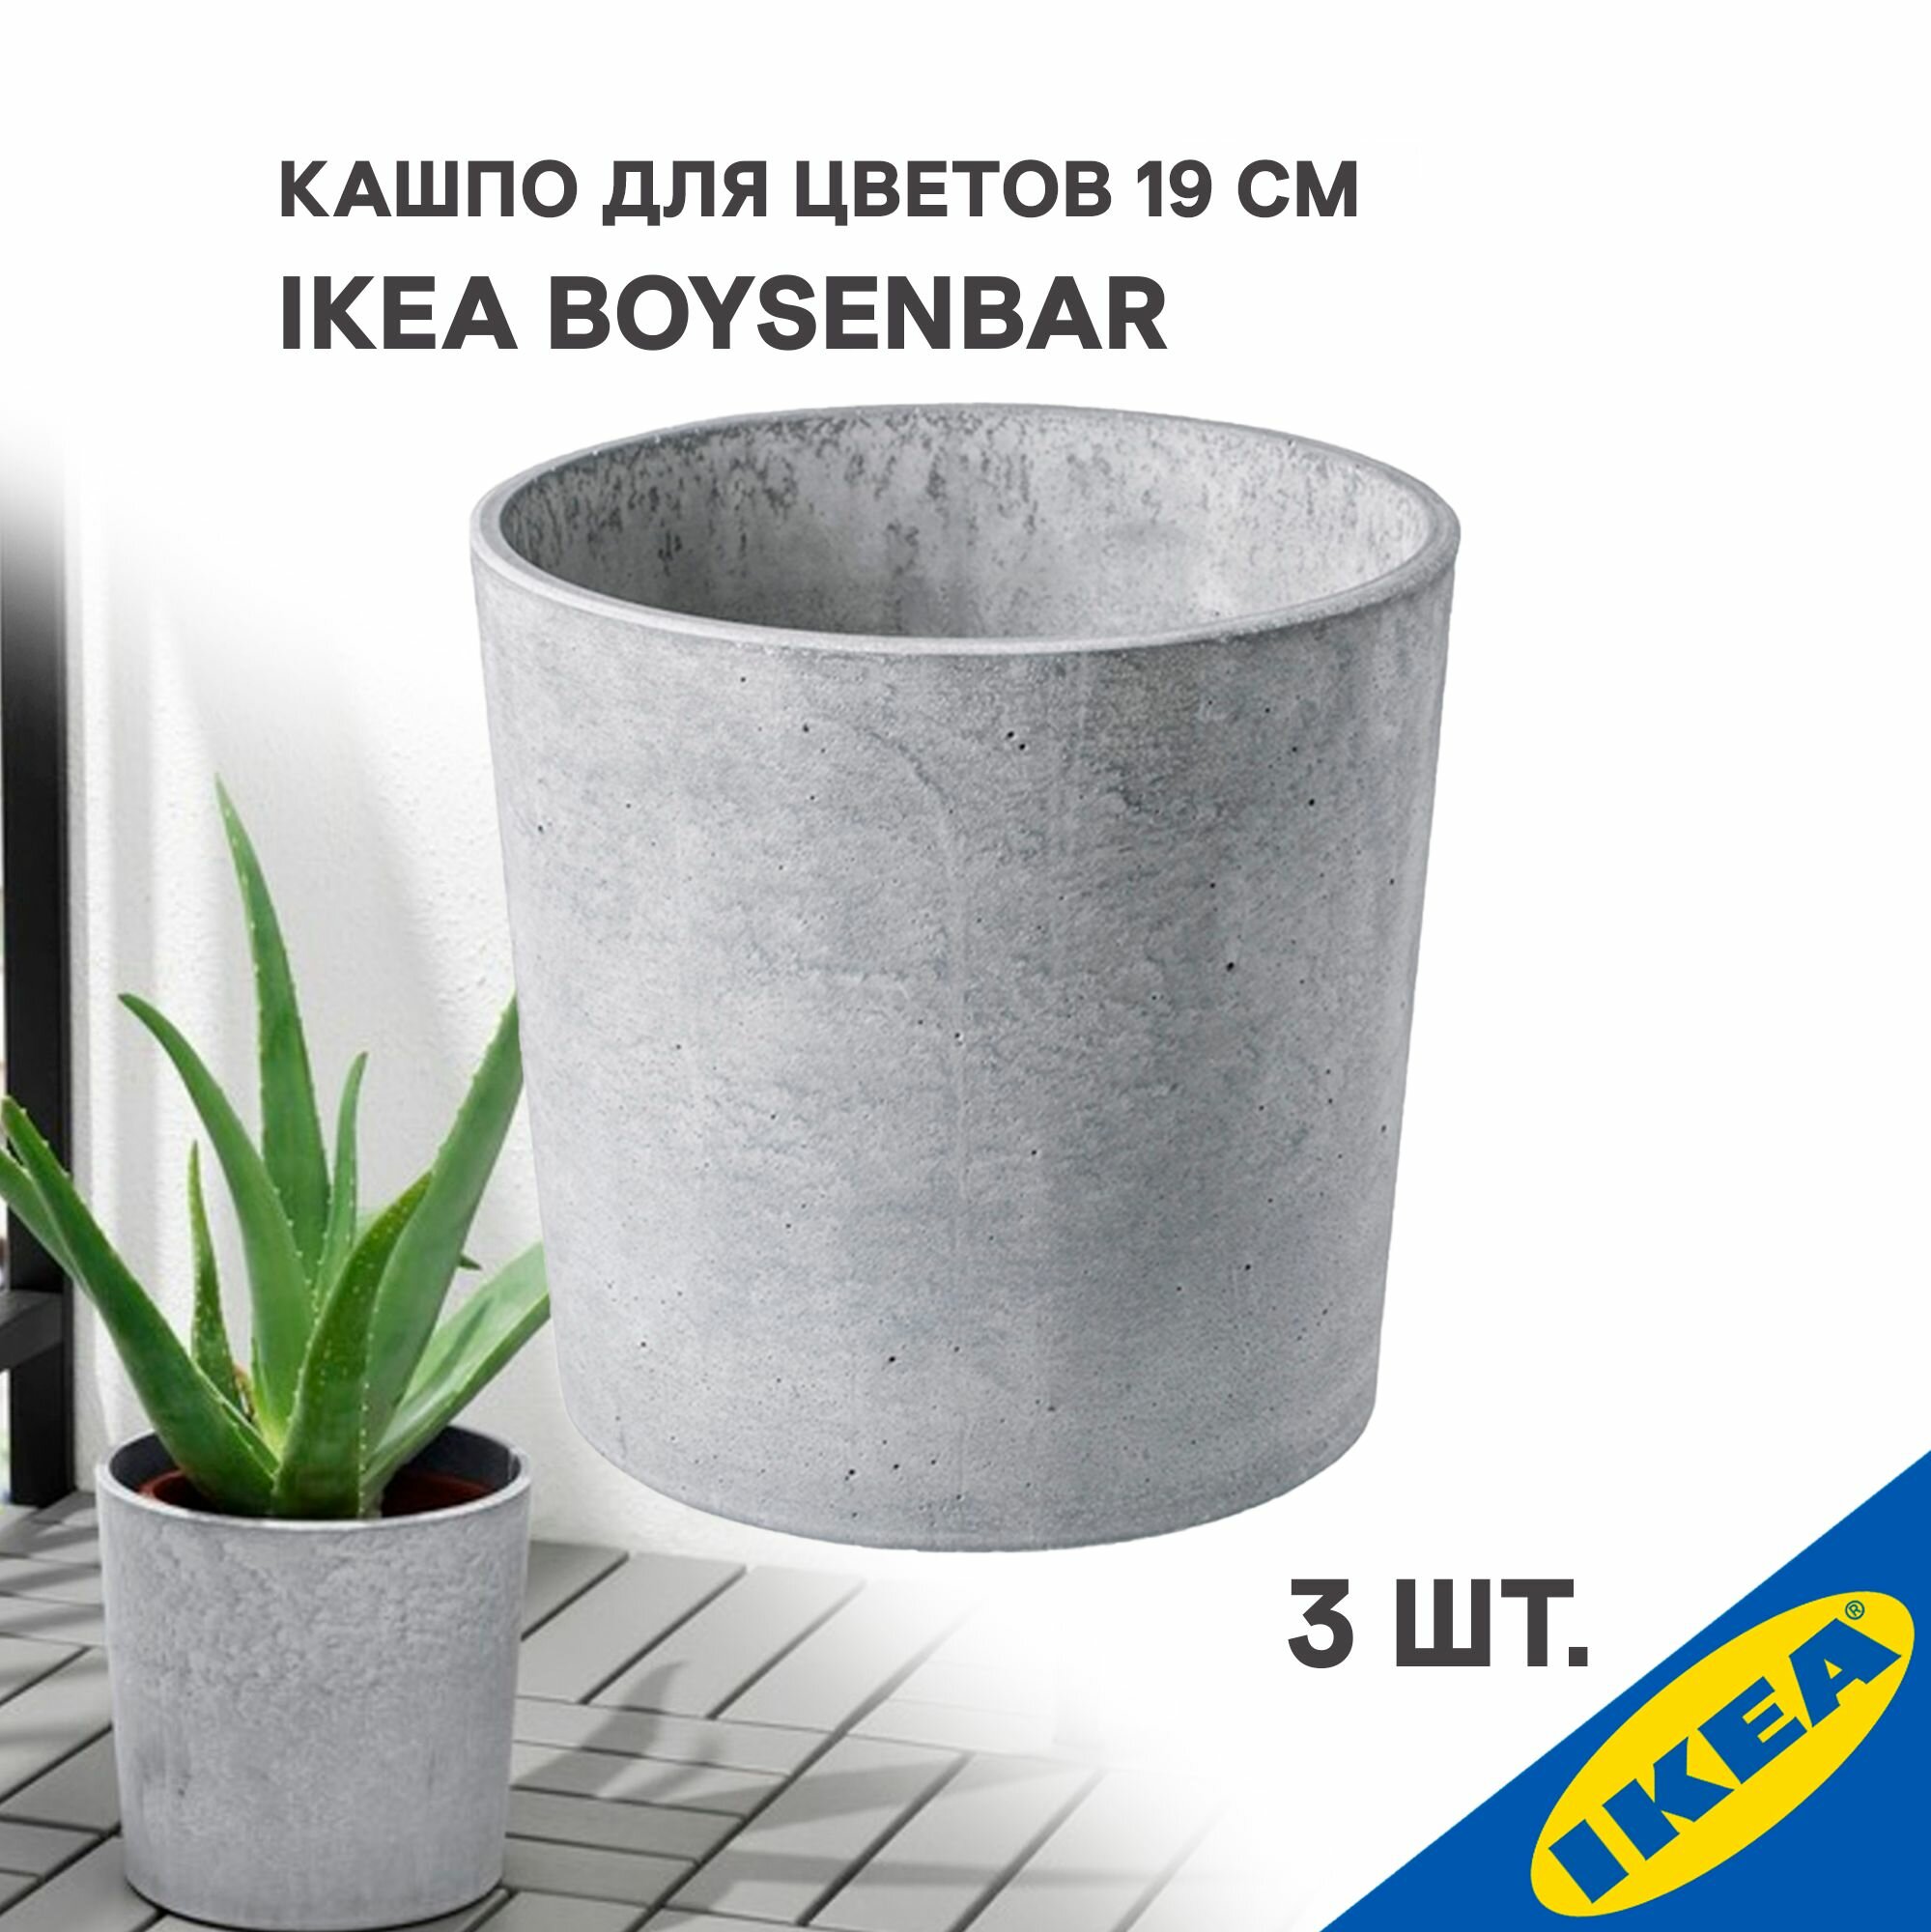 Кашпо 3 шт. для дома/улицы 19 см IKEA BOYSENBAR бойсенбэр светло-серый